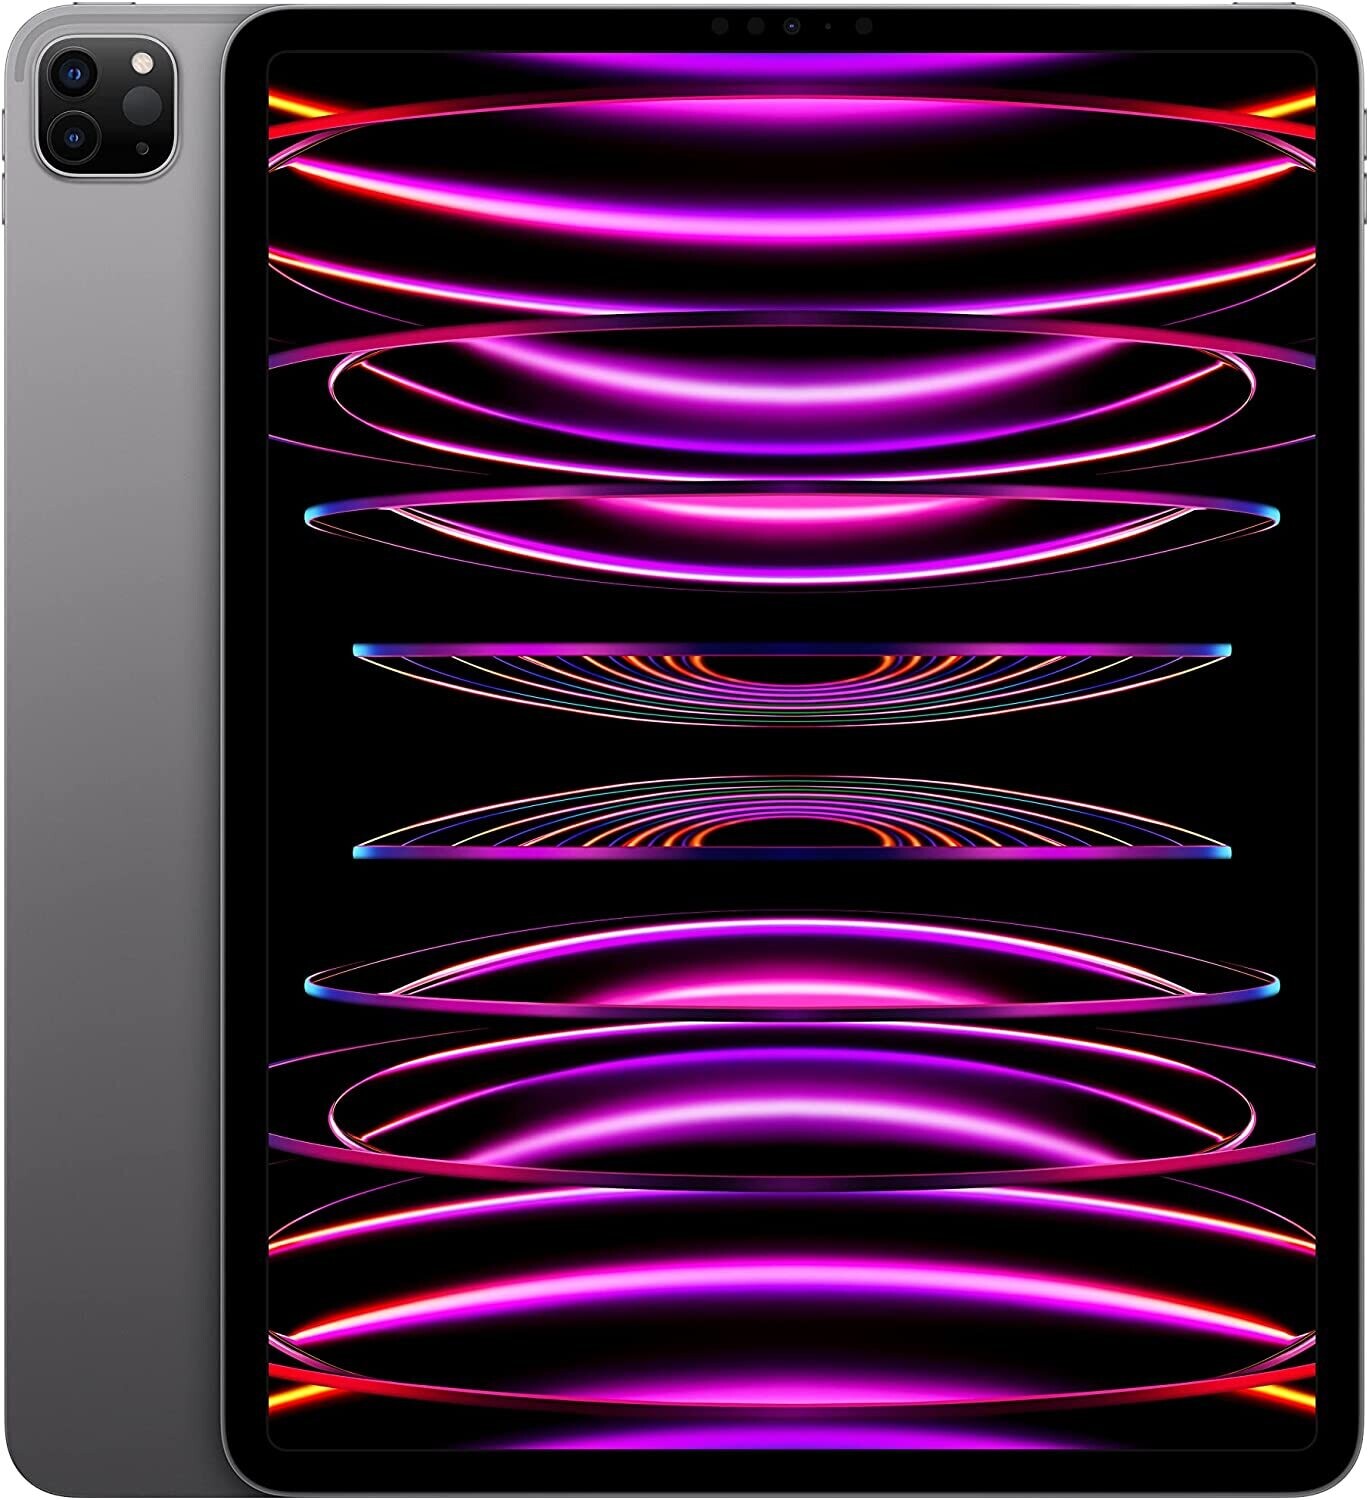 2022 Apple 12.9-inch iPad Pro (Wi-Fi, 256GB) - Space Gray (6th Generation)